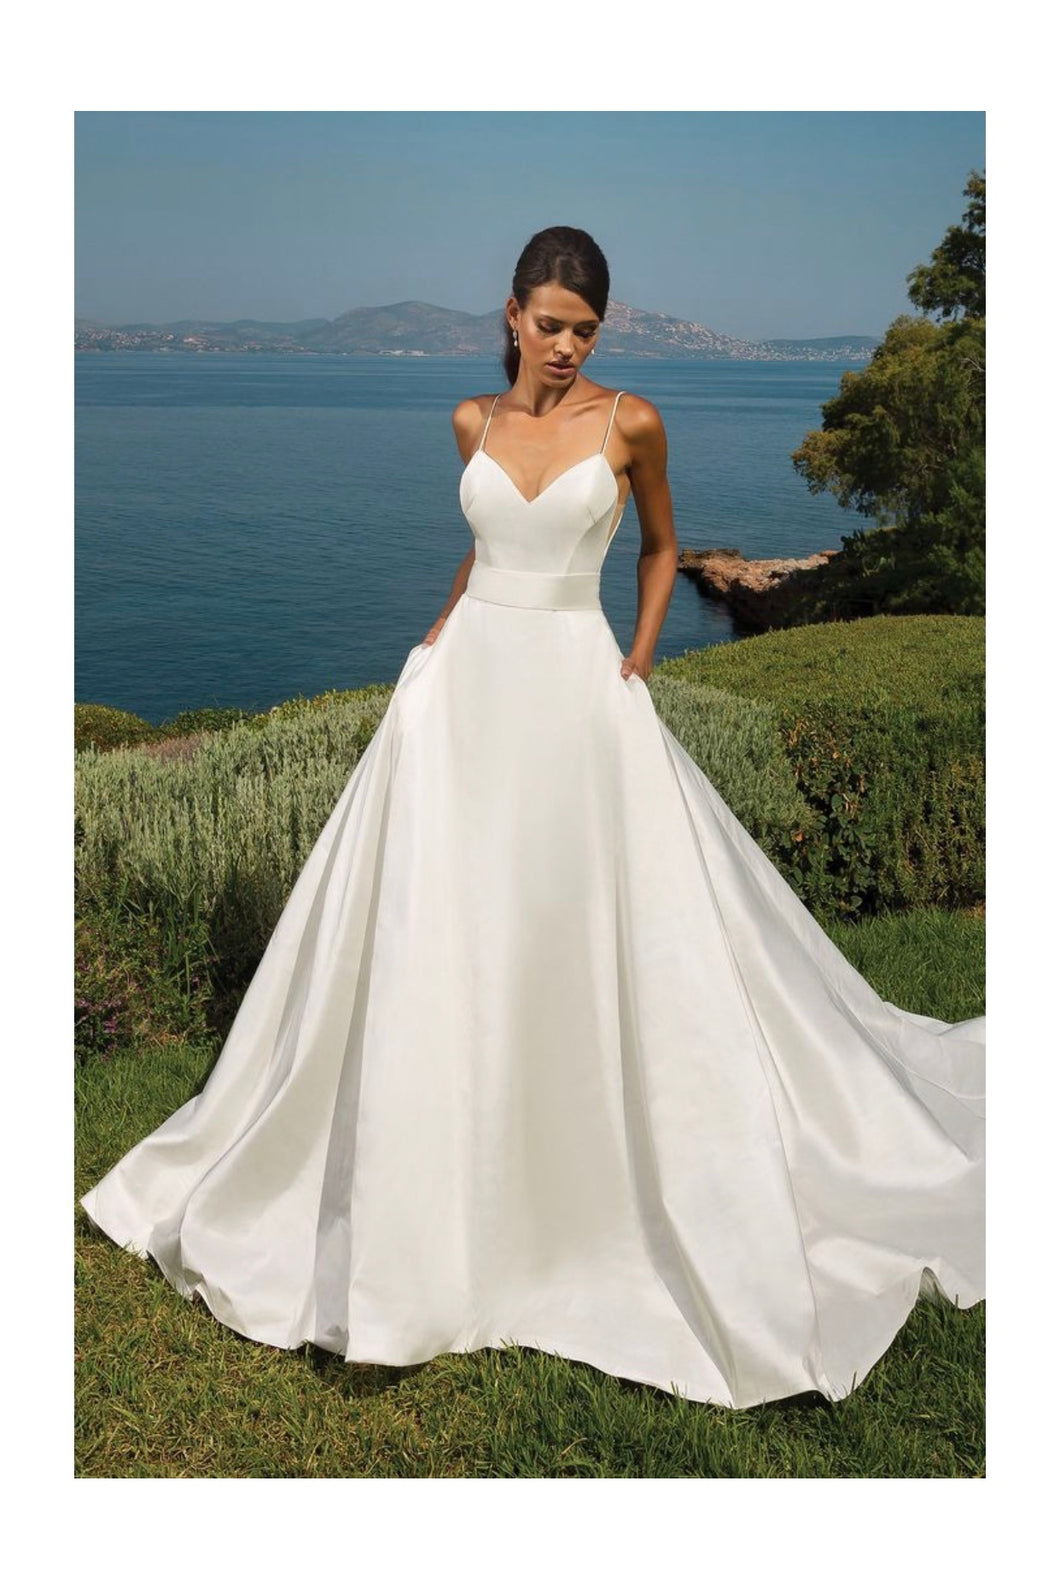 JUSTIN ALEXANDER 'Silk dupion a-line' wedding dress size-08 NEW